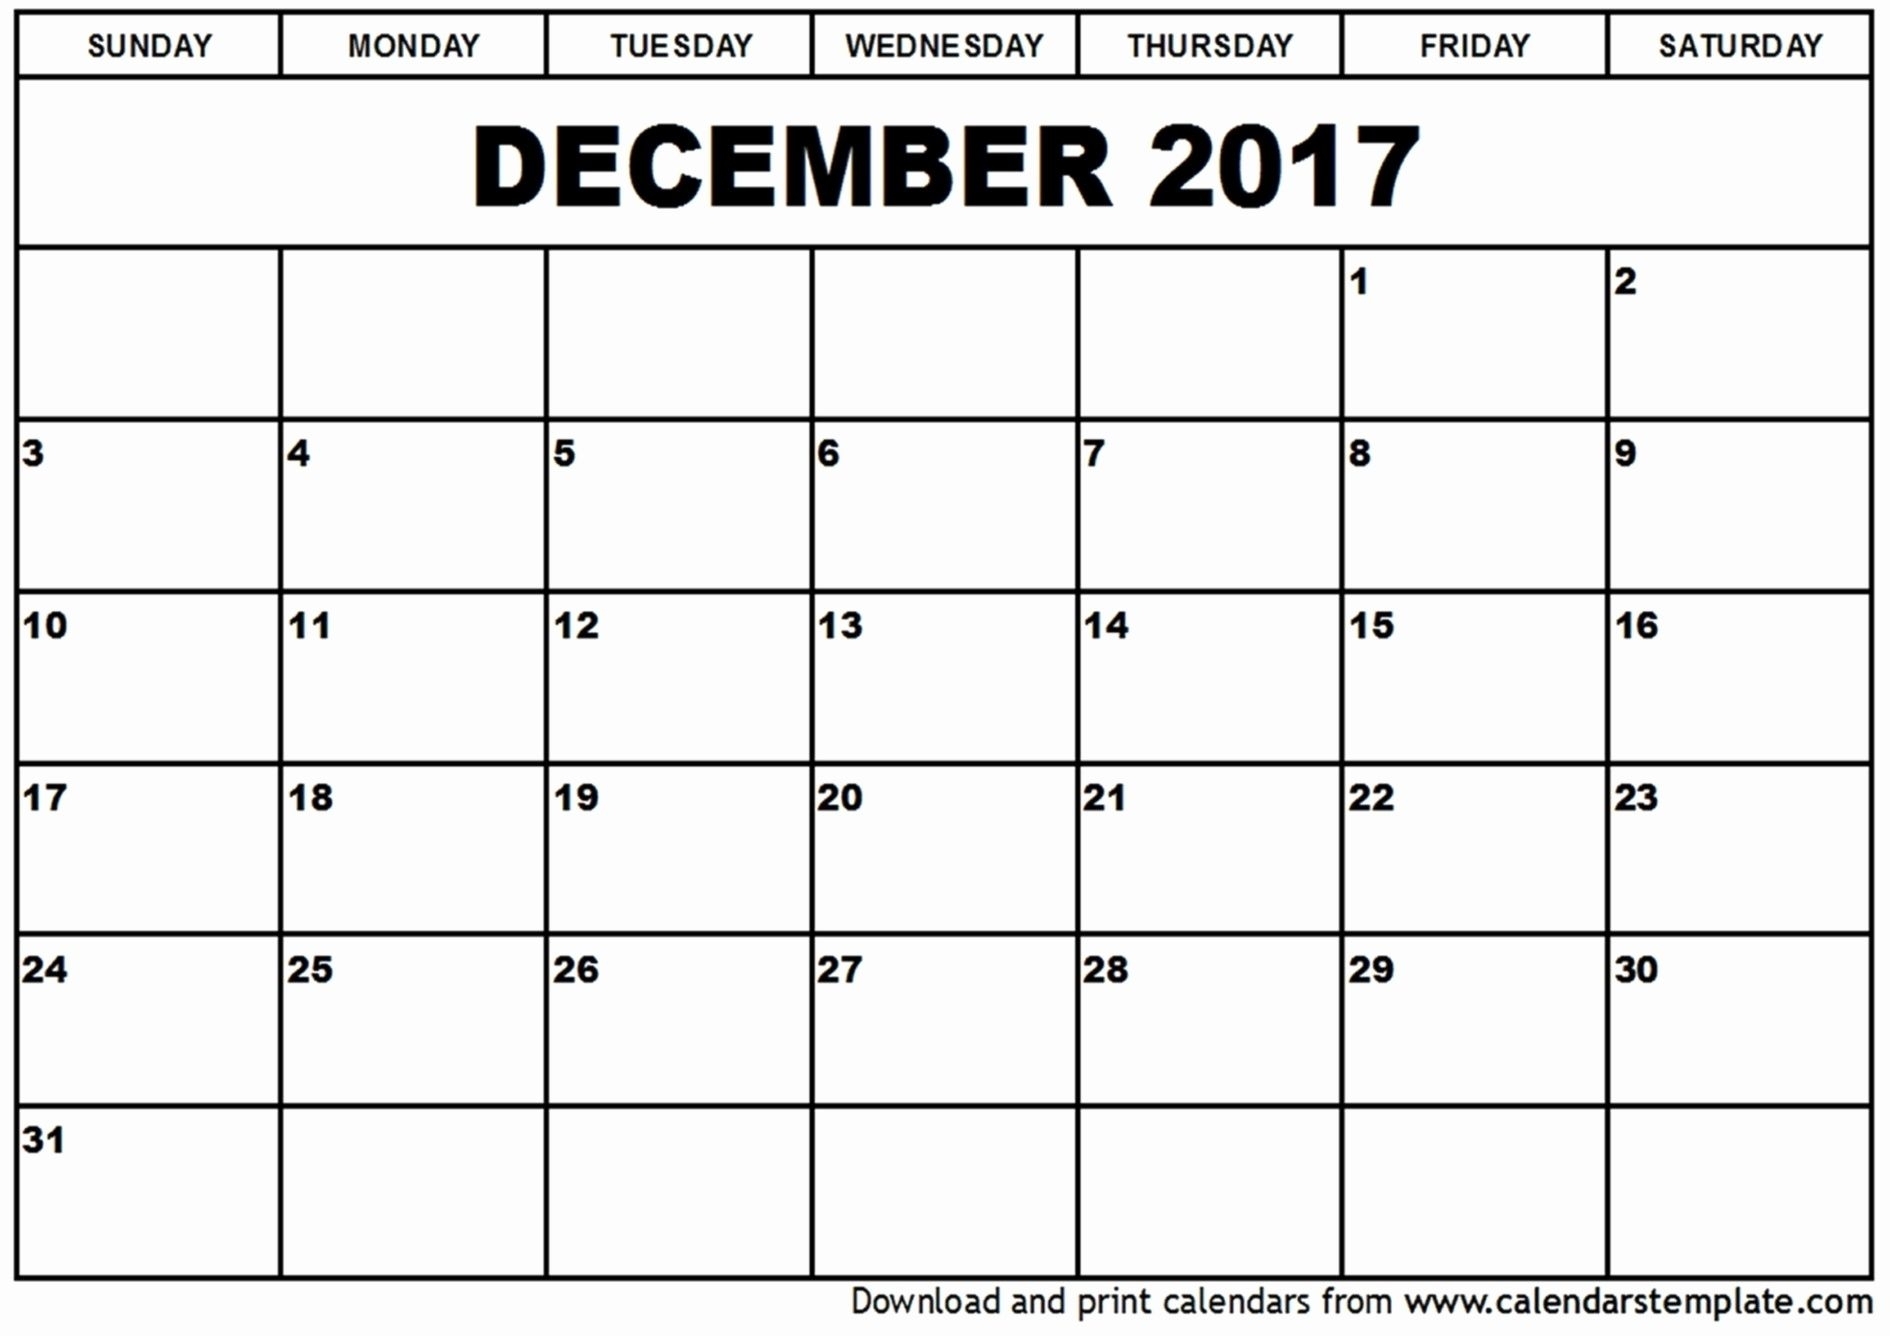 Get Legal Size November 2021 Calendar